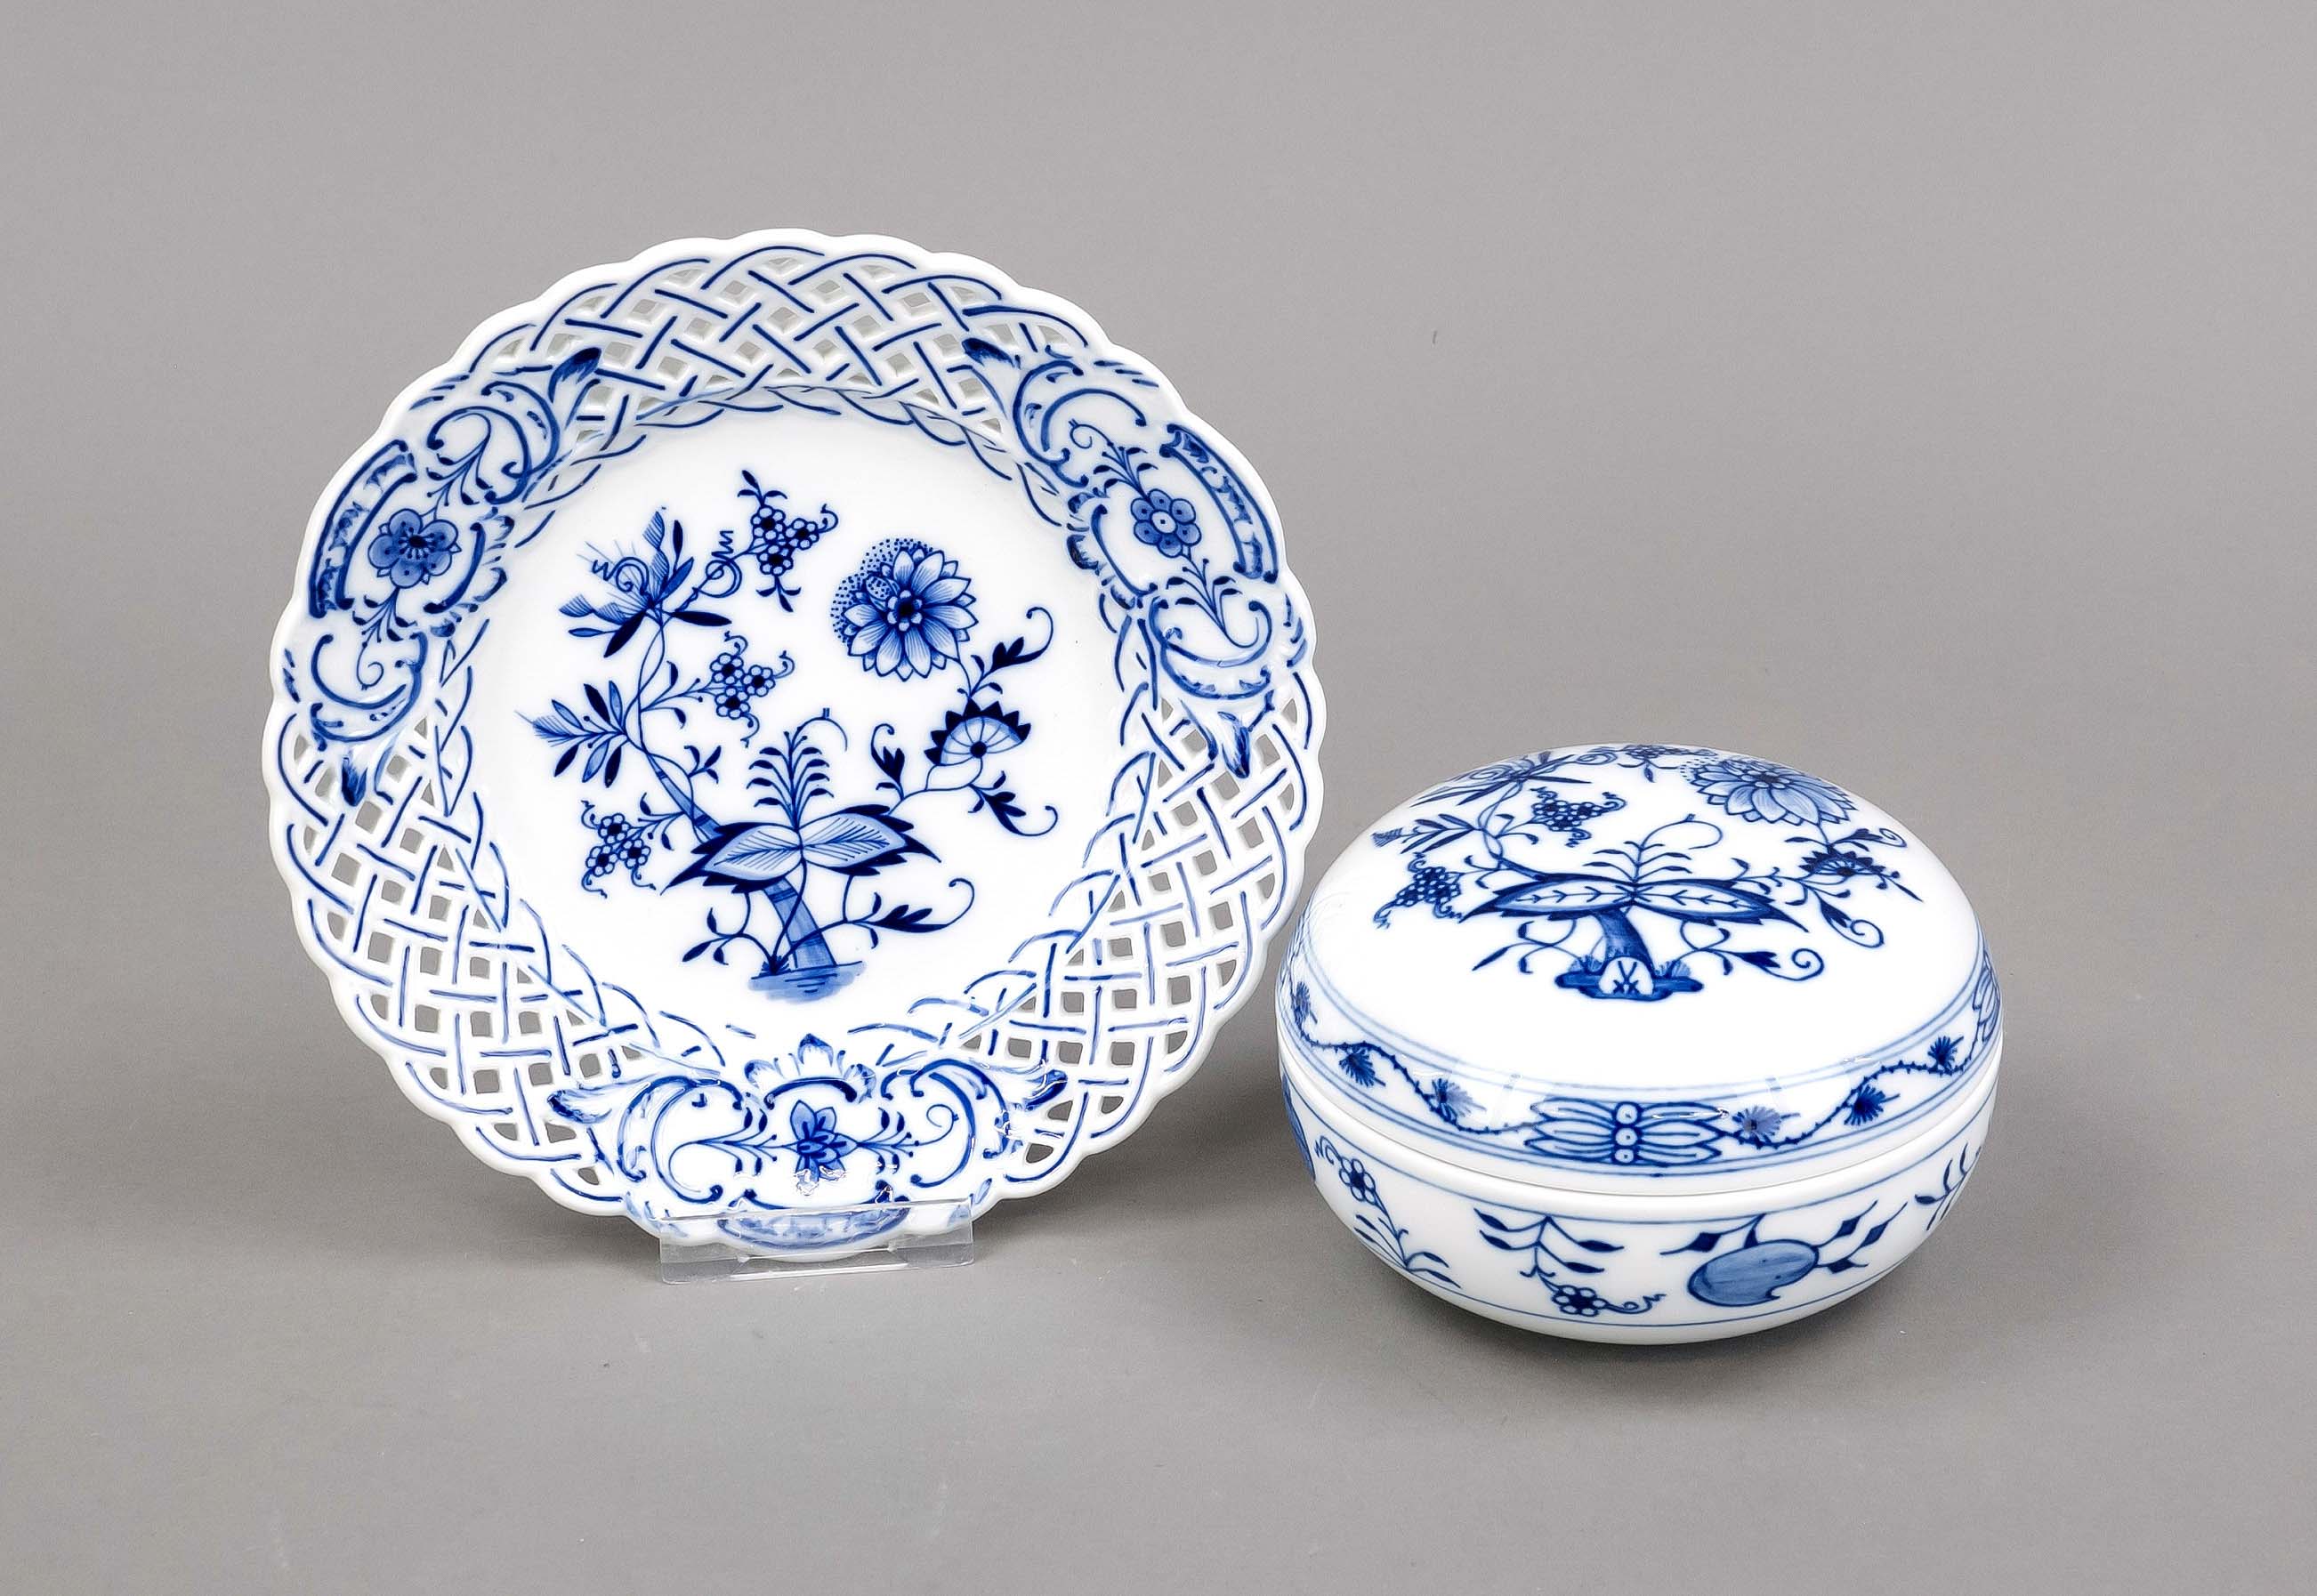 Lidded box and pierced plate, onion pattern decoration in underglaze blue, round lidded box,